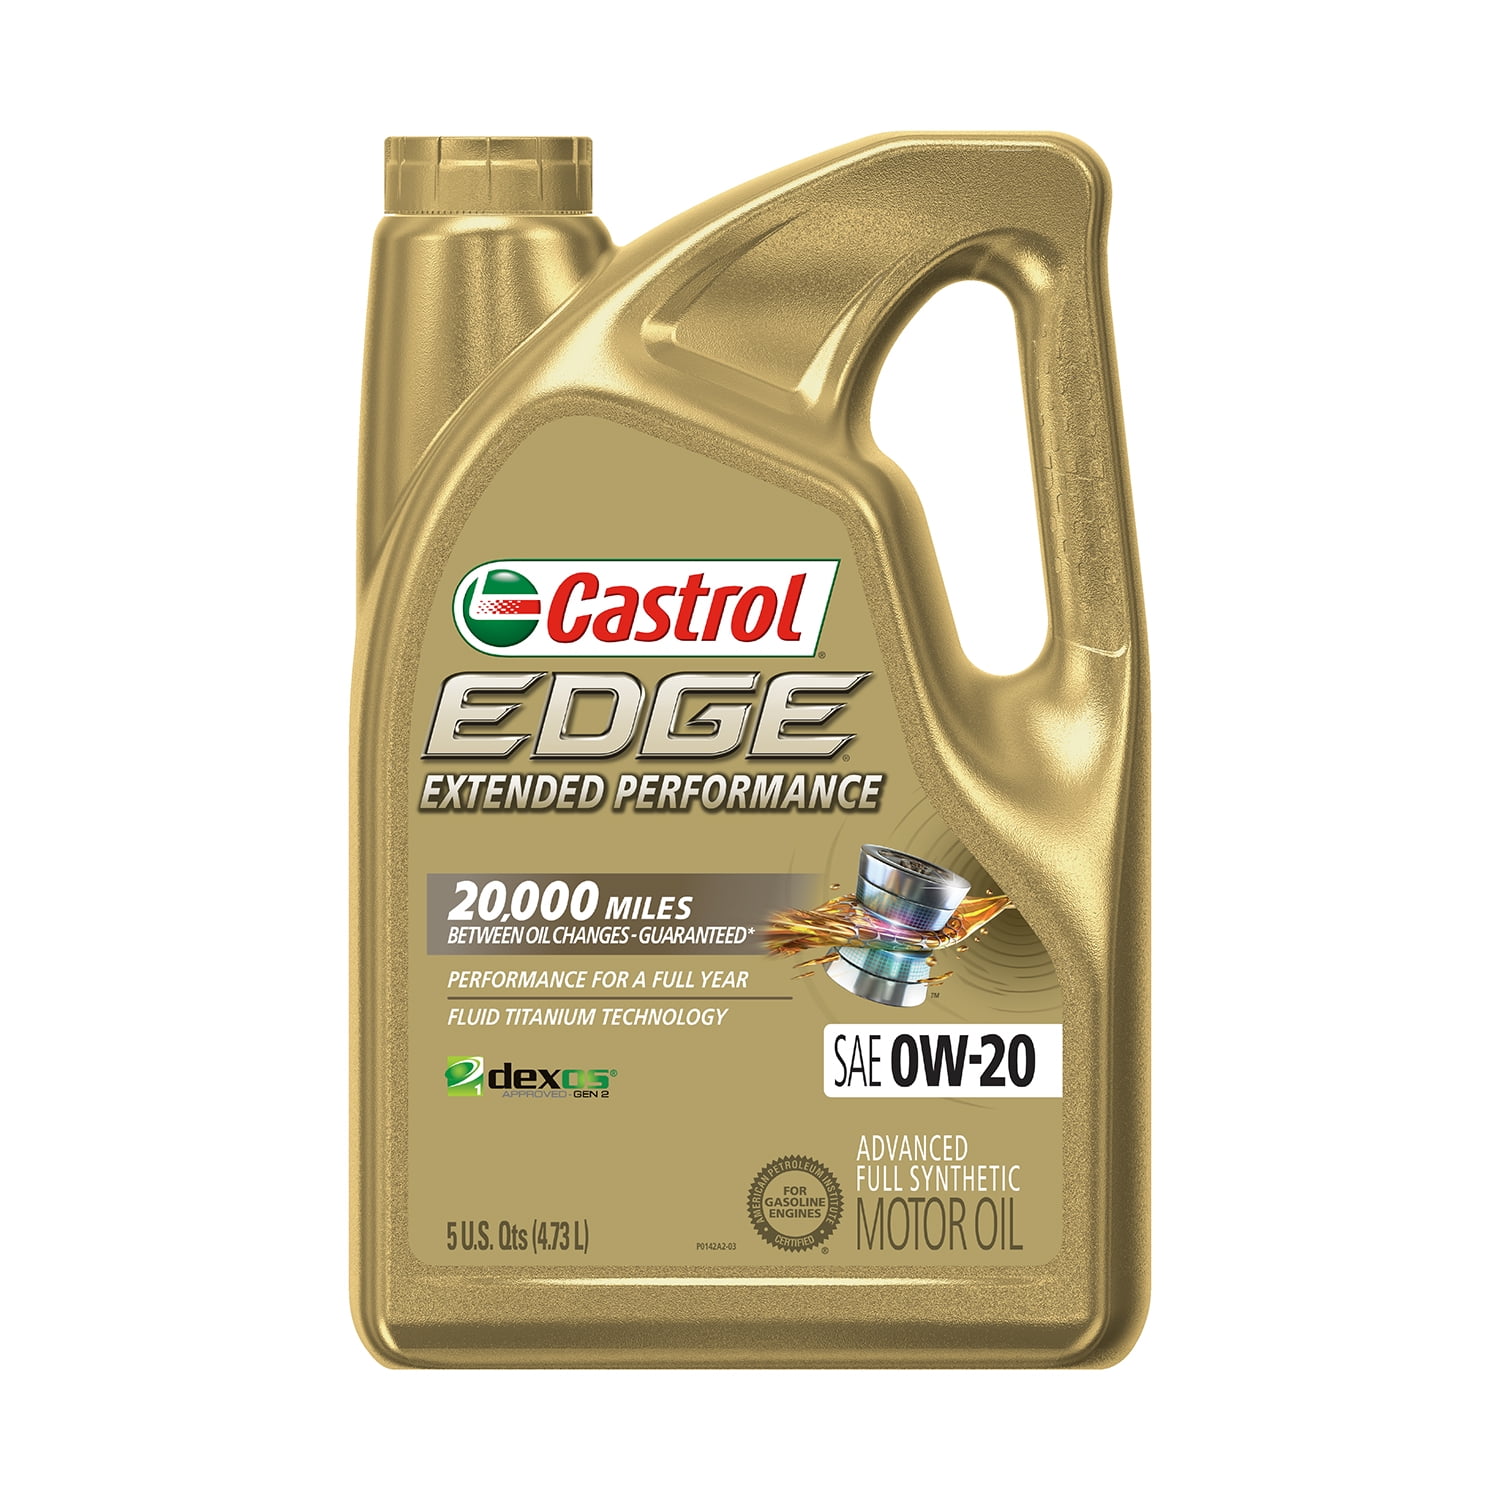 Castrol Edge Extended Performance 0w Advanced Full Synthetic Motor Oil 5 Quarts Walmart Com Walmart Com